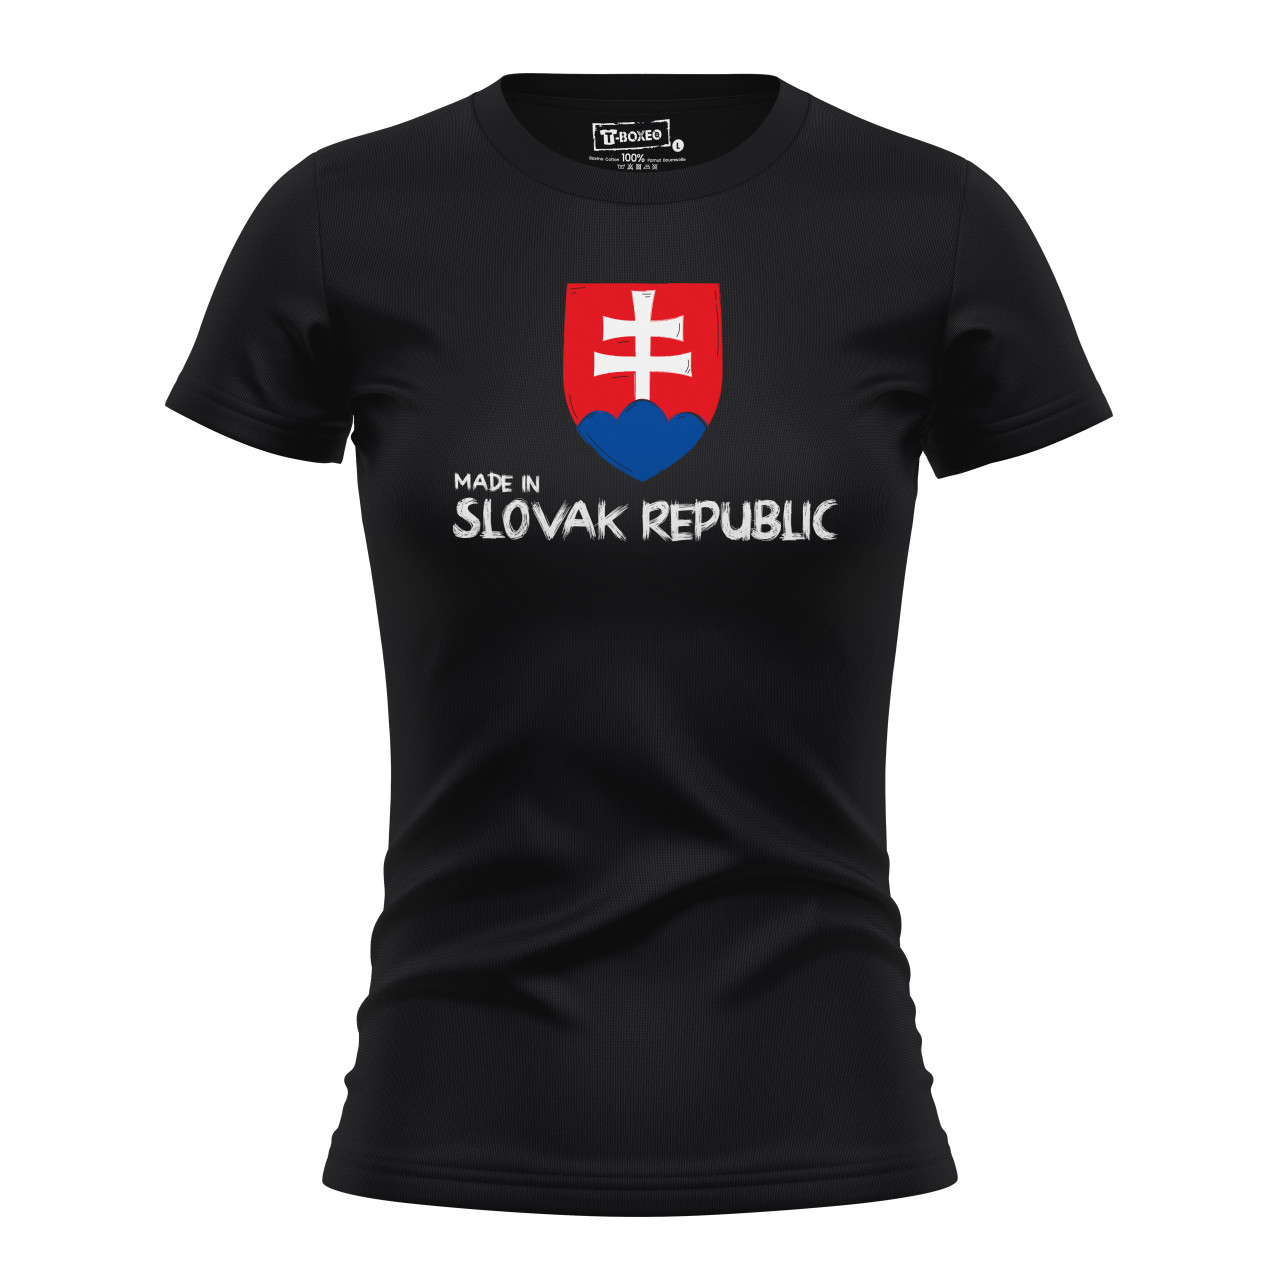 Dámské tričko s potiskem "Made in Slovak Republic" SK